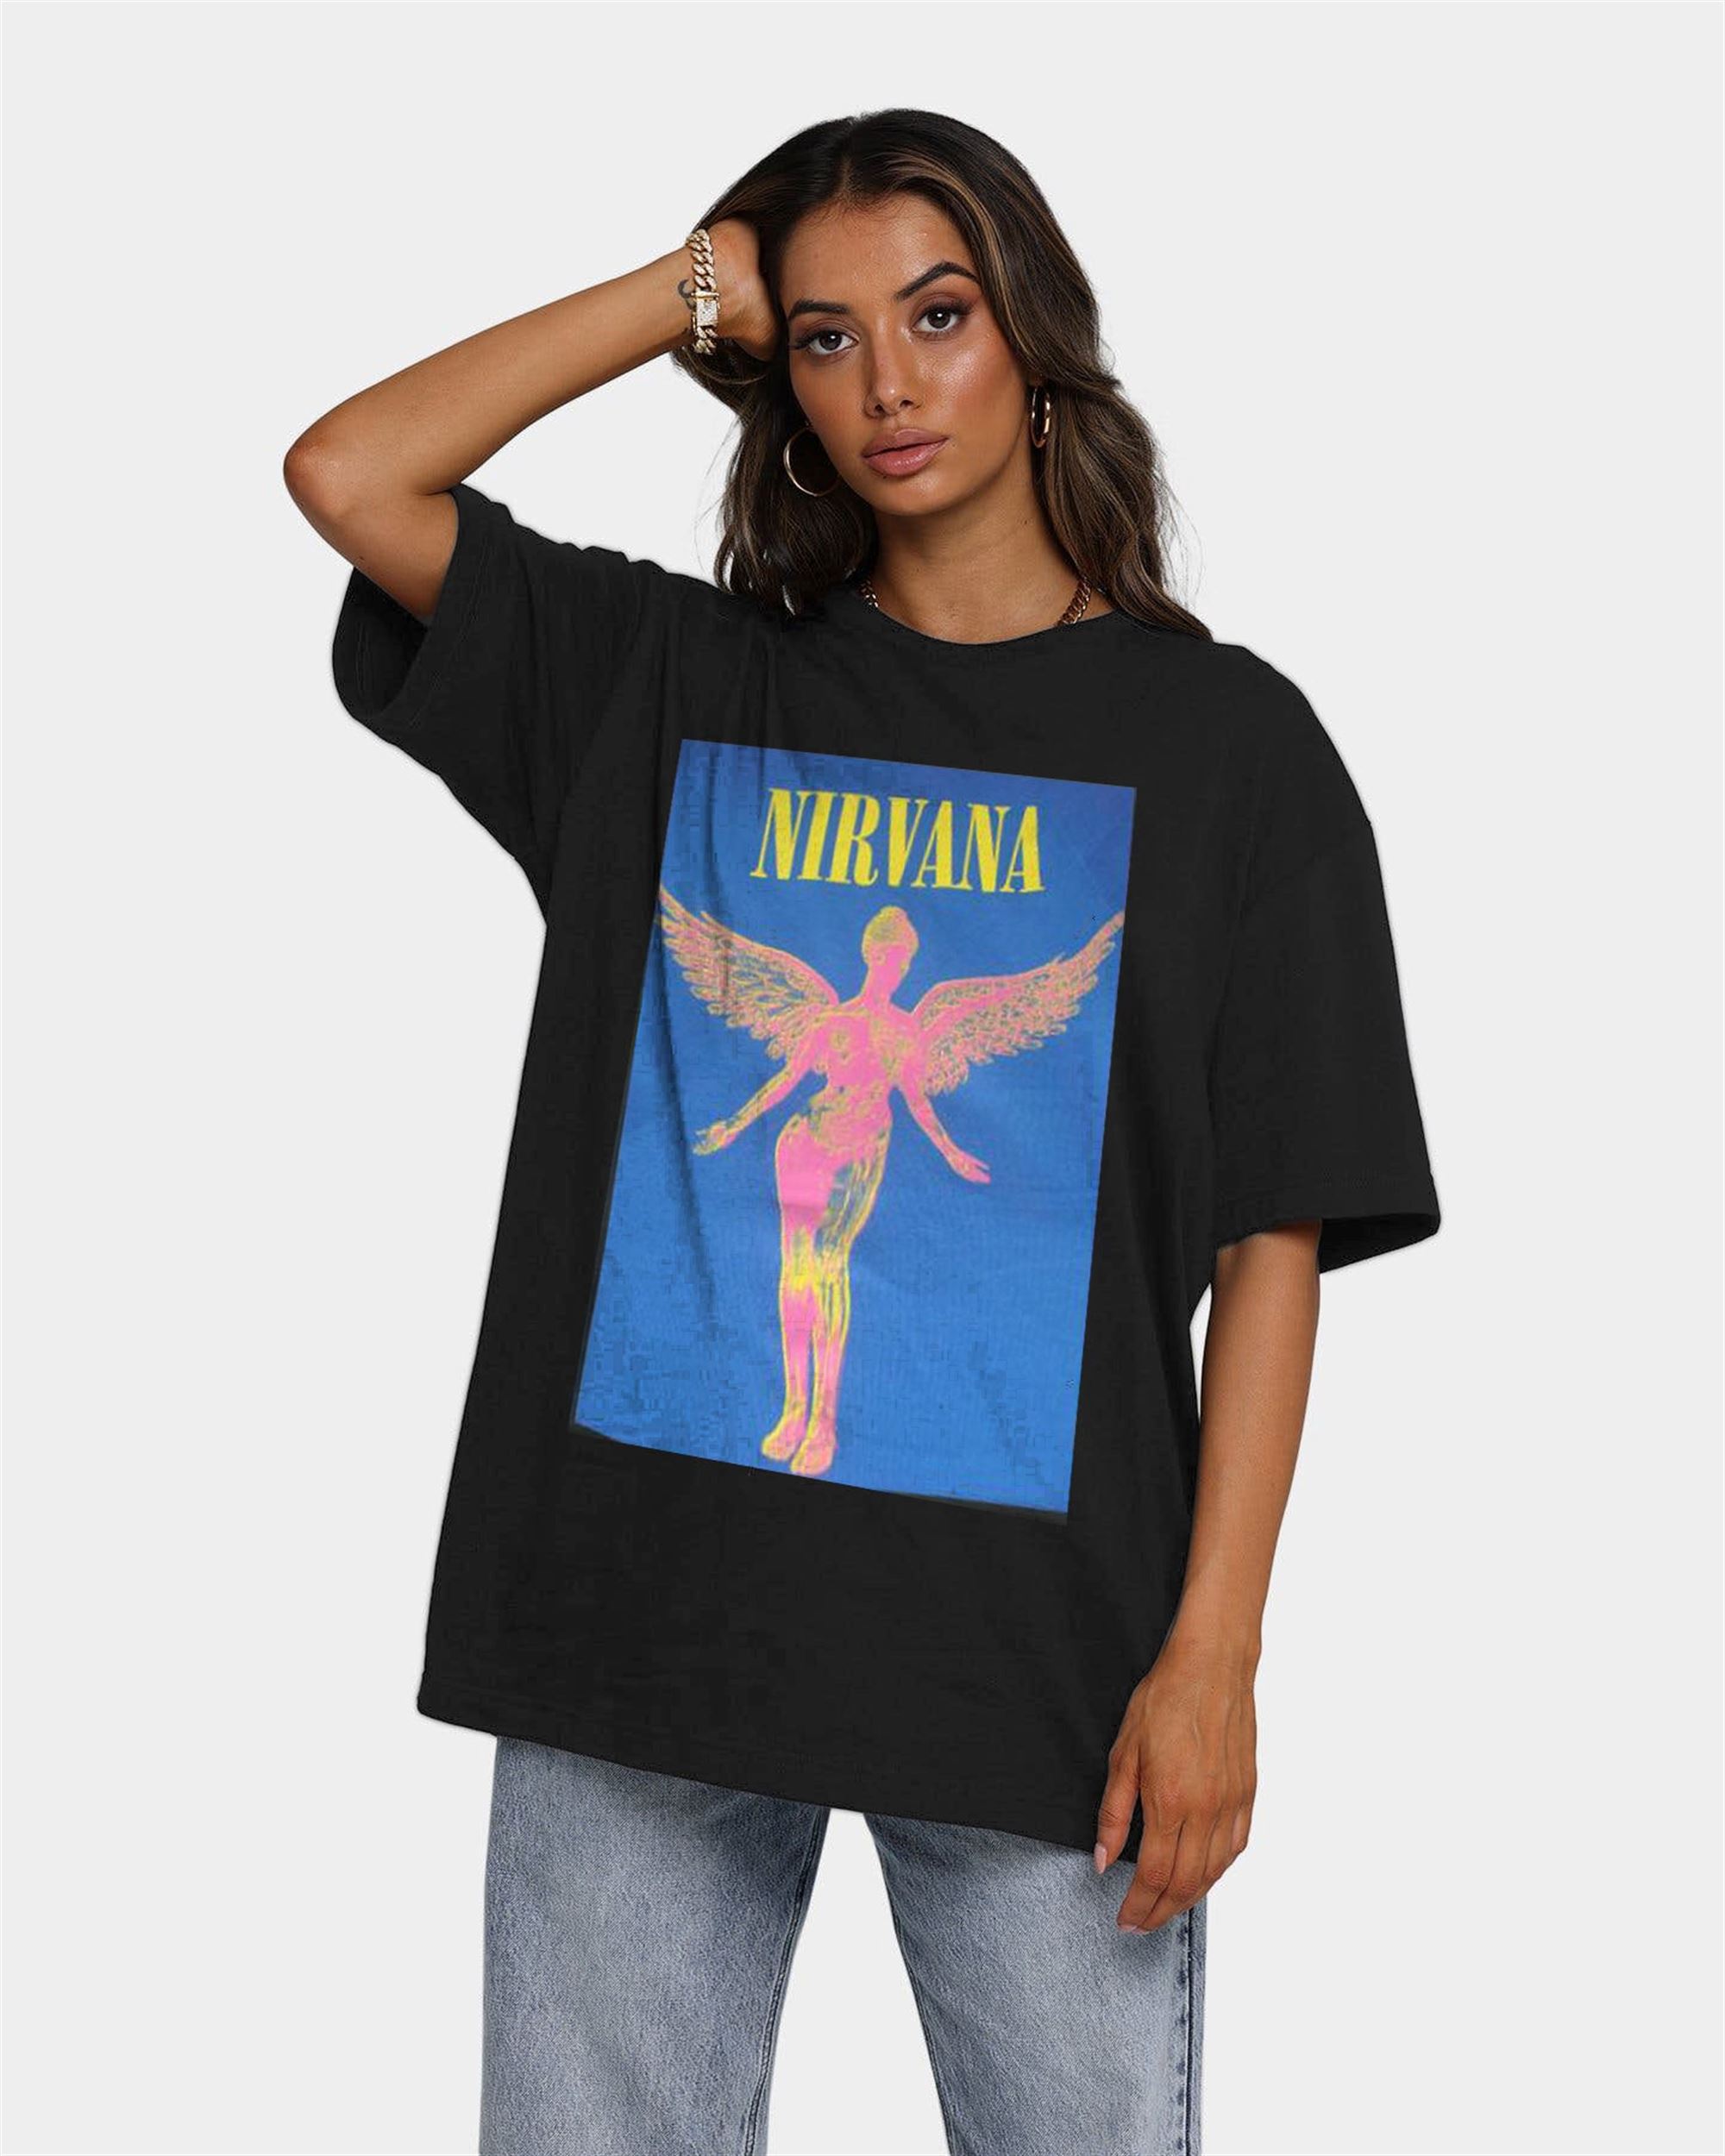 Nirvana Utero Tour T-shirt Nirvana Band Shirt Nirvana Shirt Funny Shirtretro 90 Shirt Vintage Nirvana Shirt Rock Band T-shirt H